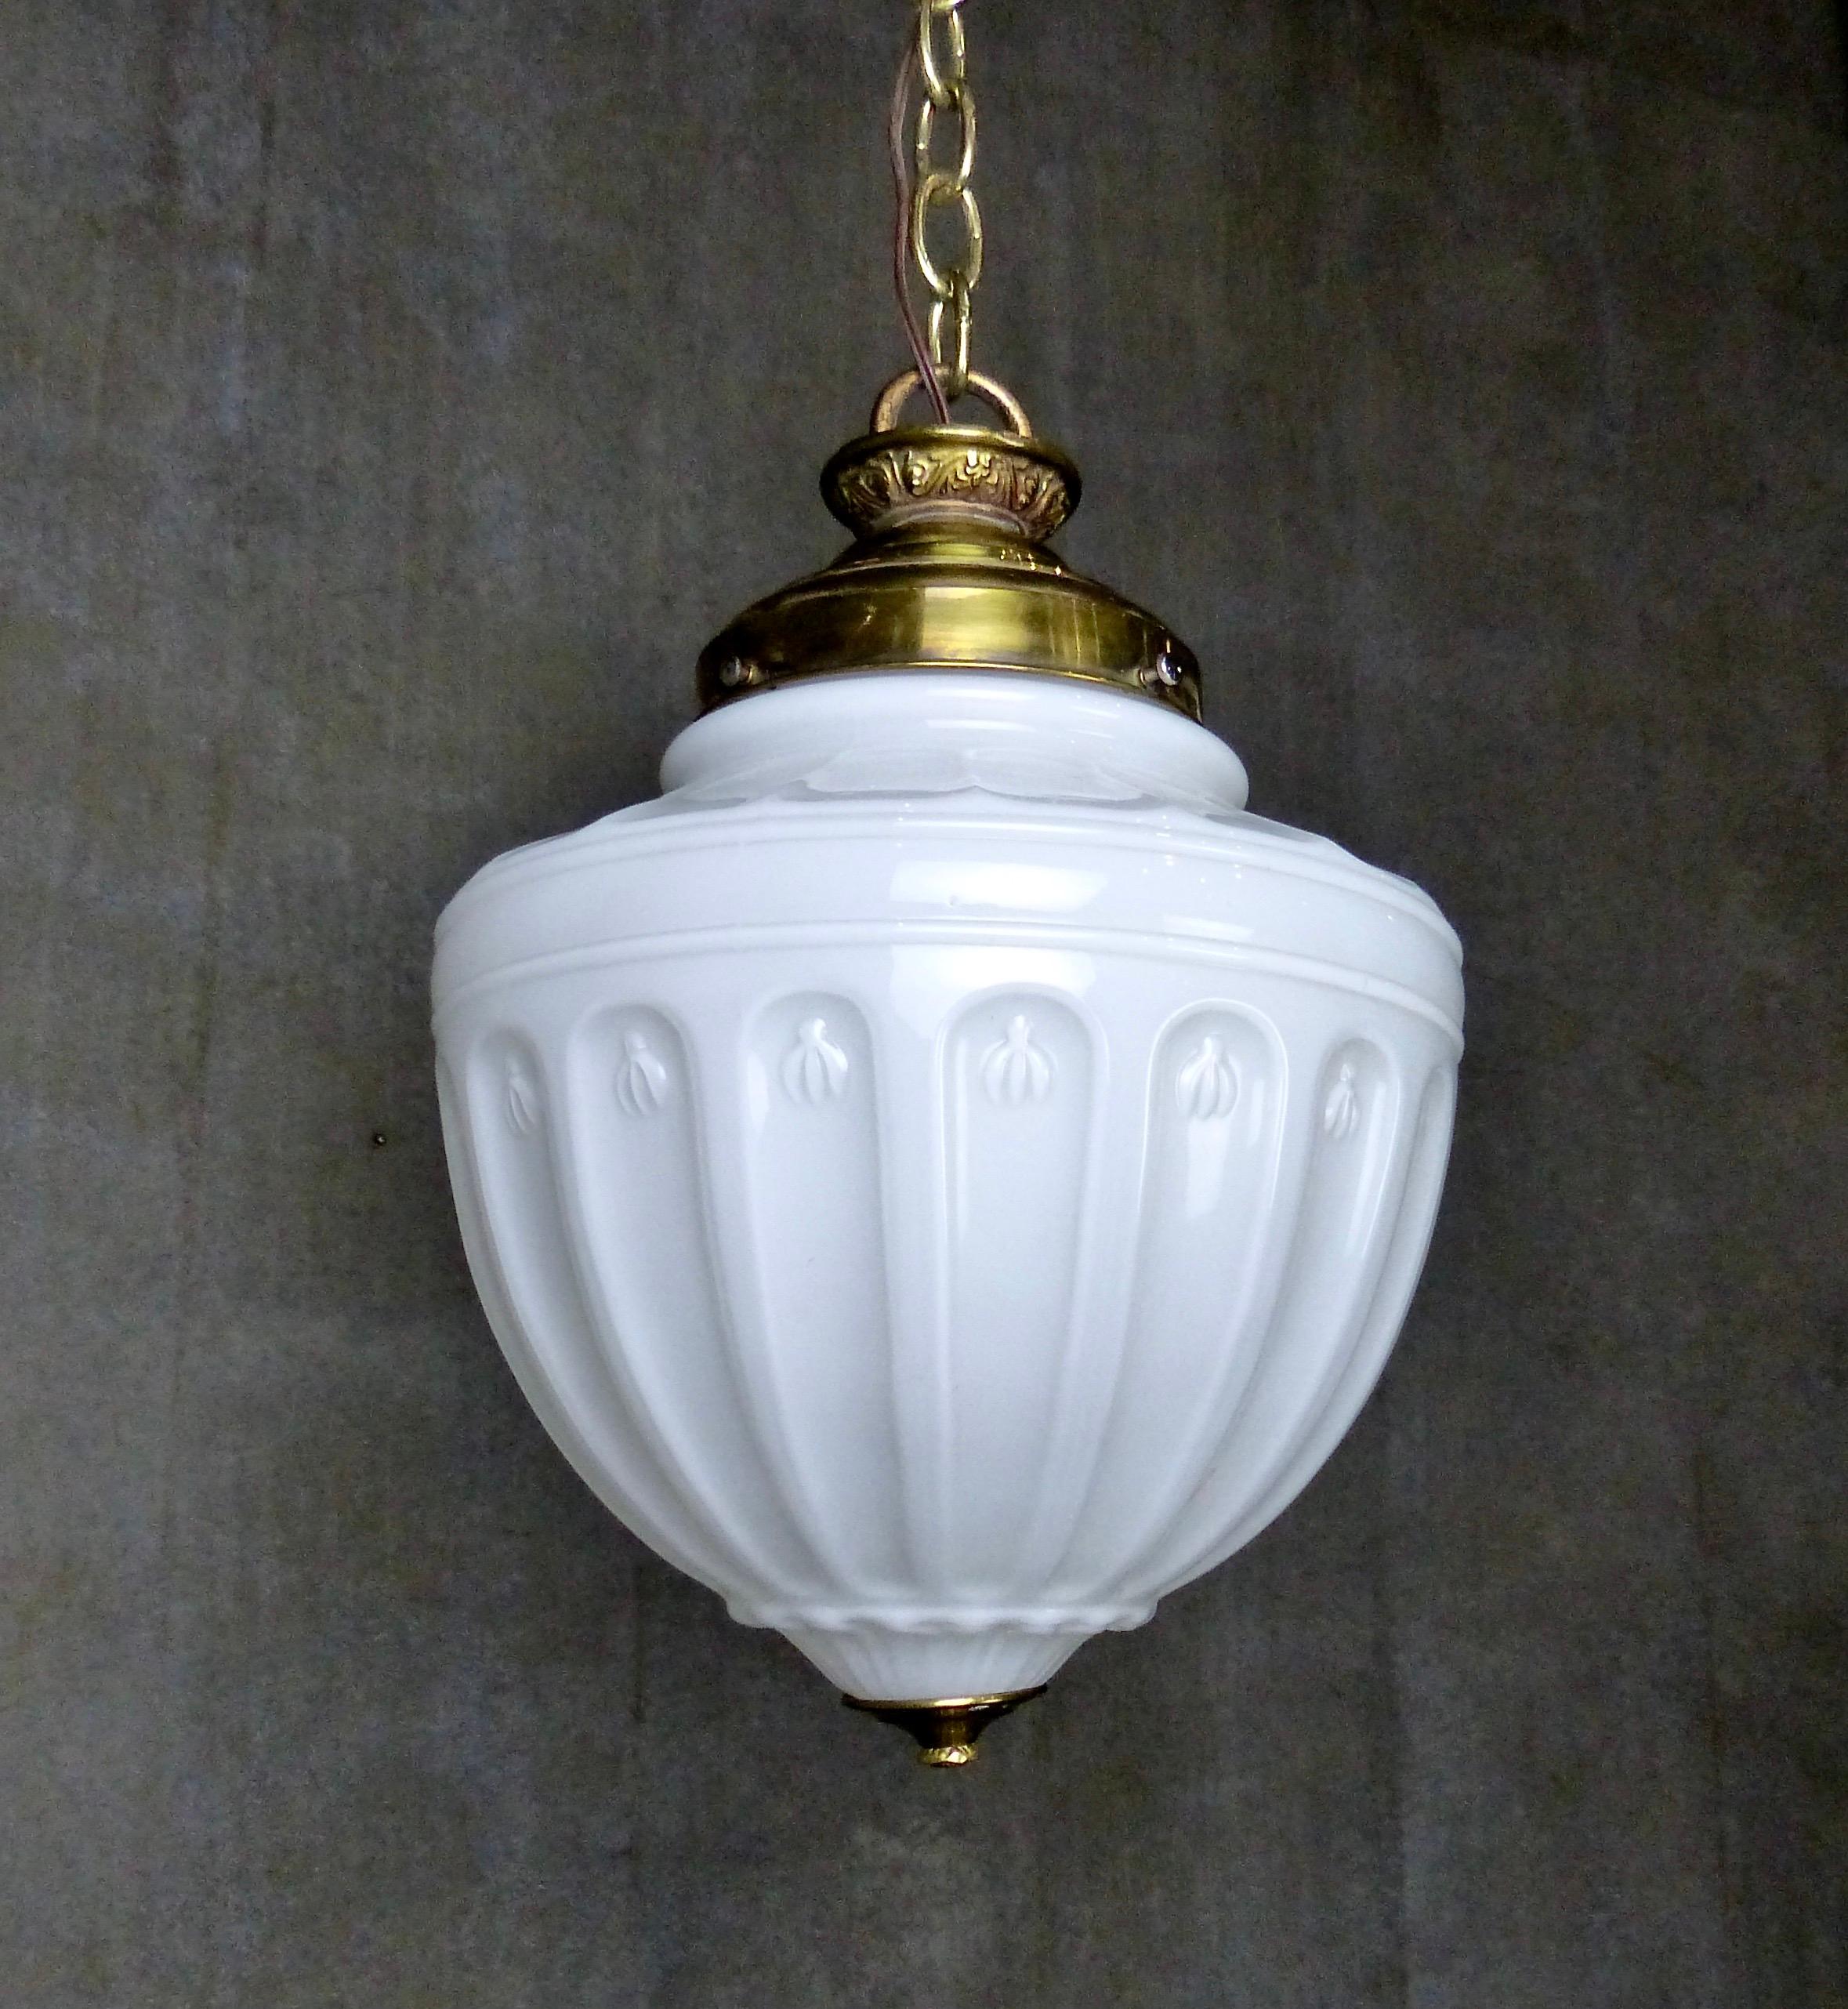 1910 pendant light